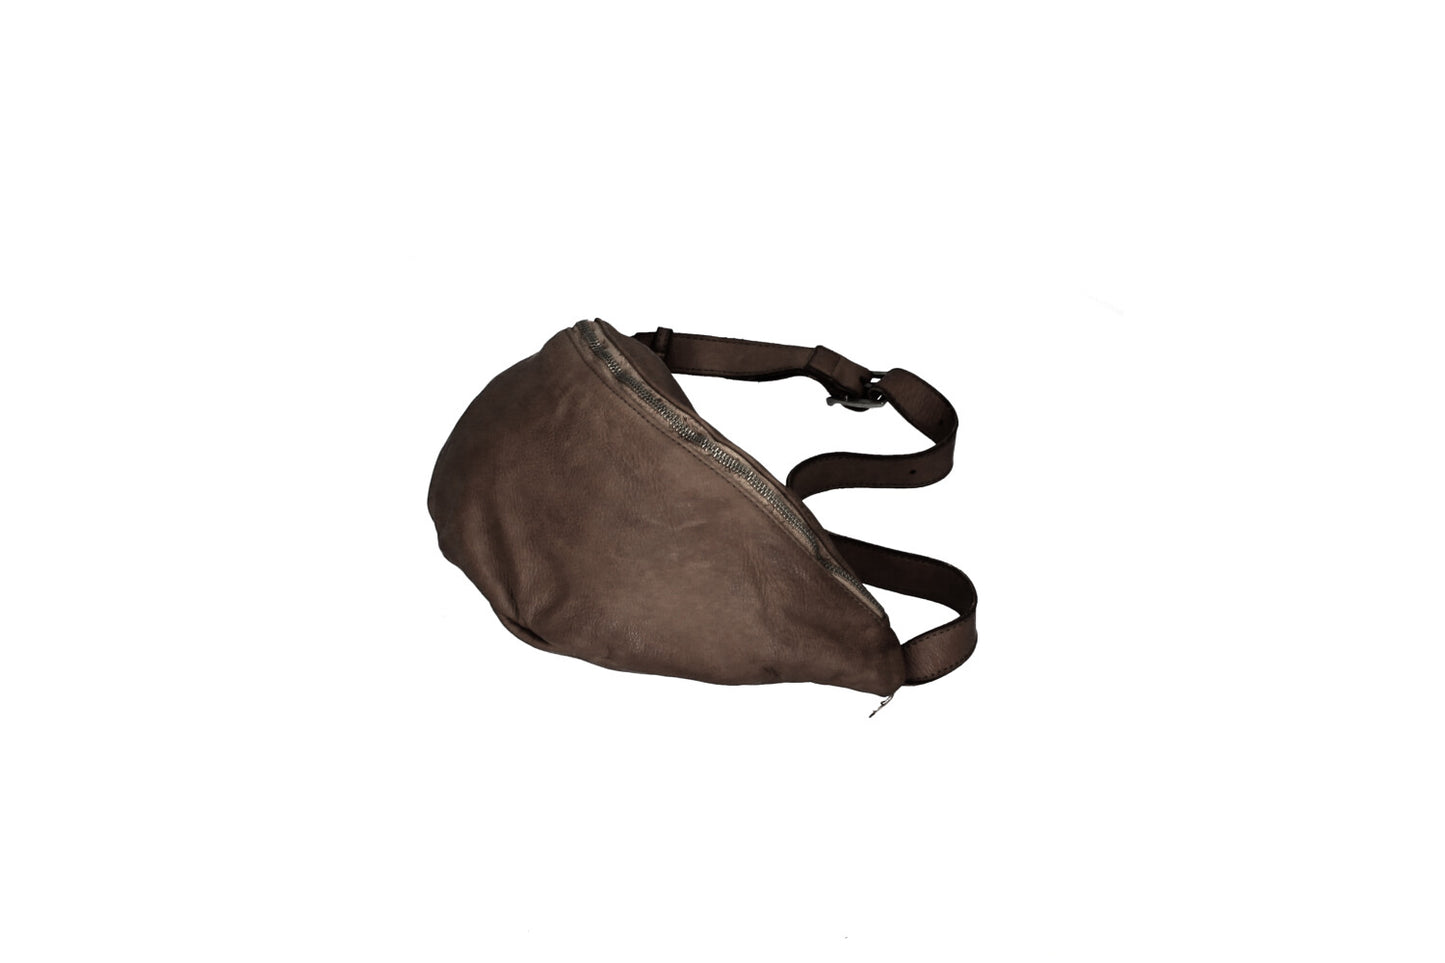 The Large Washed Leather BumBag / Sling Bag